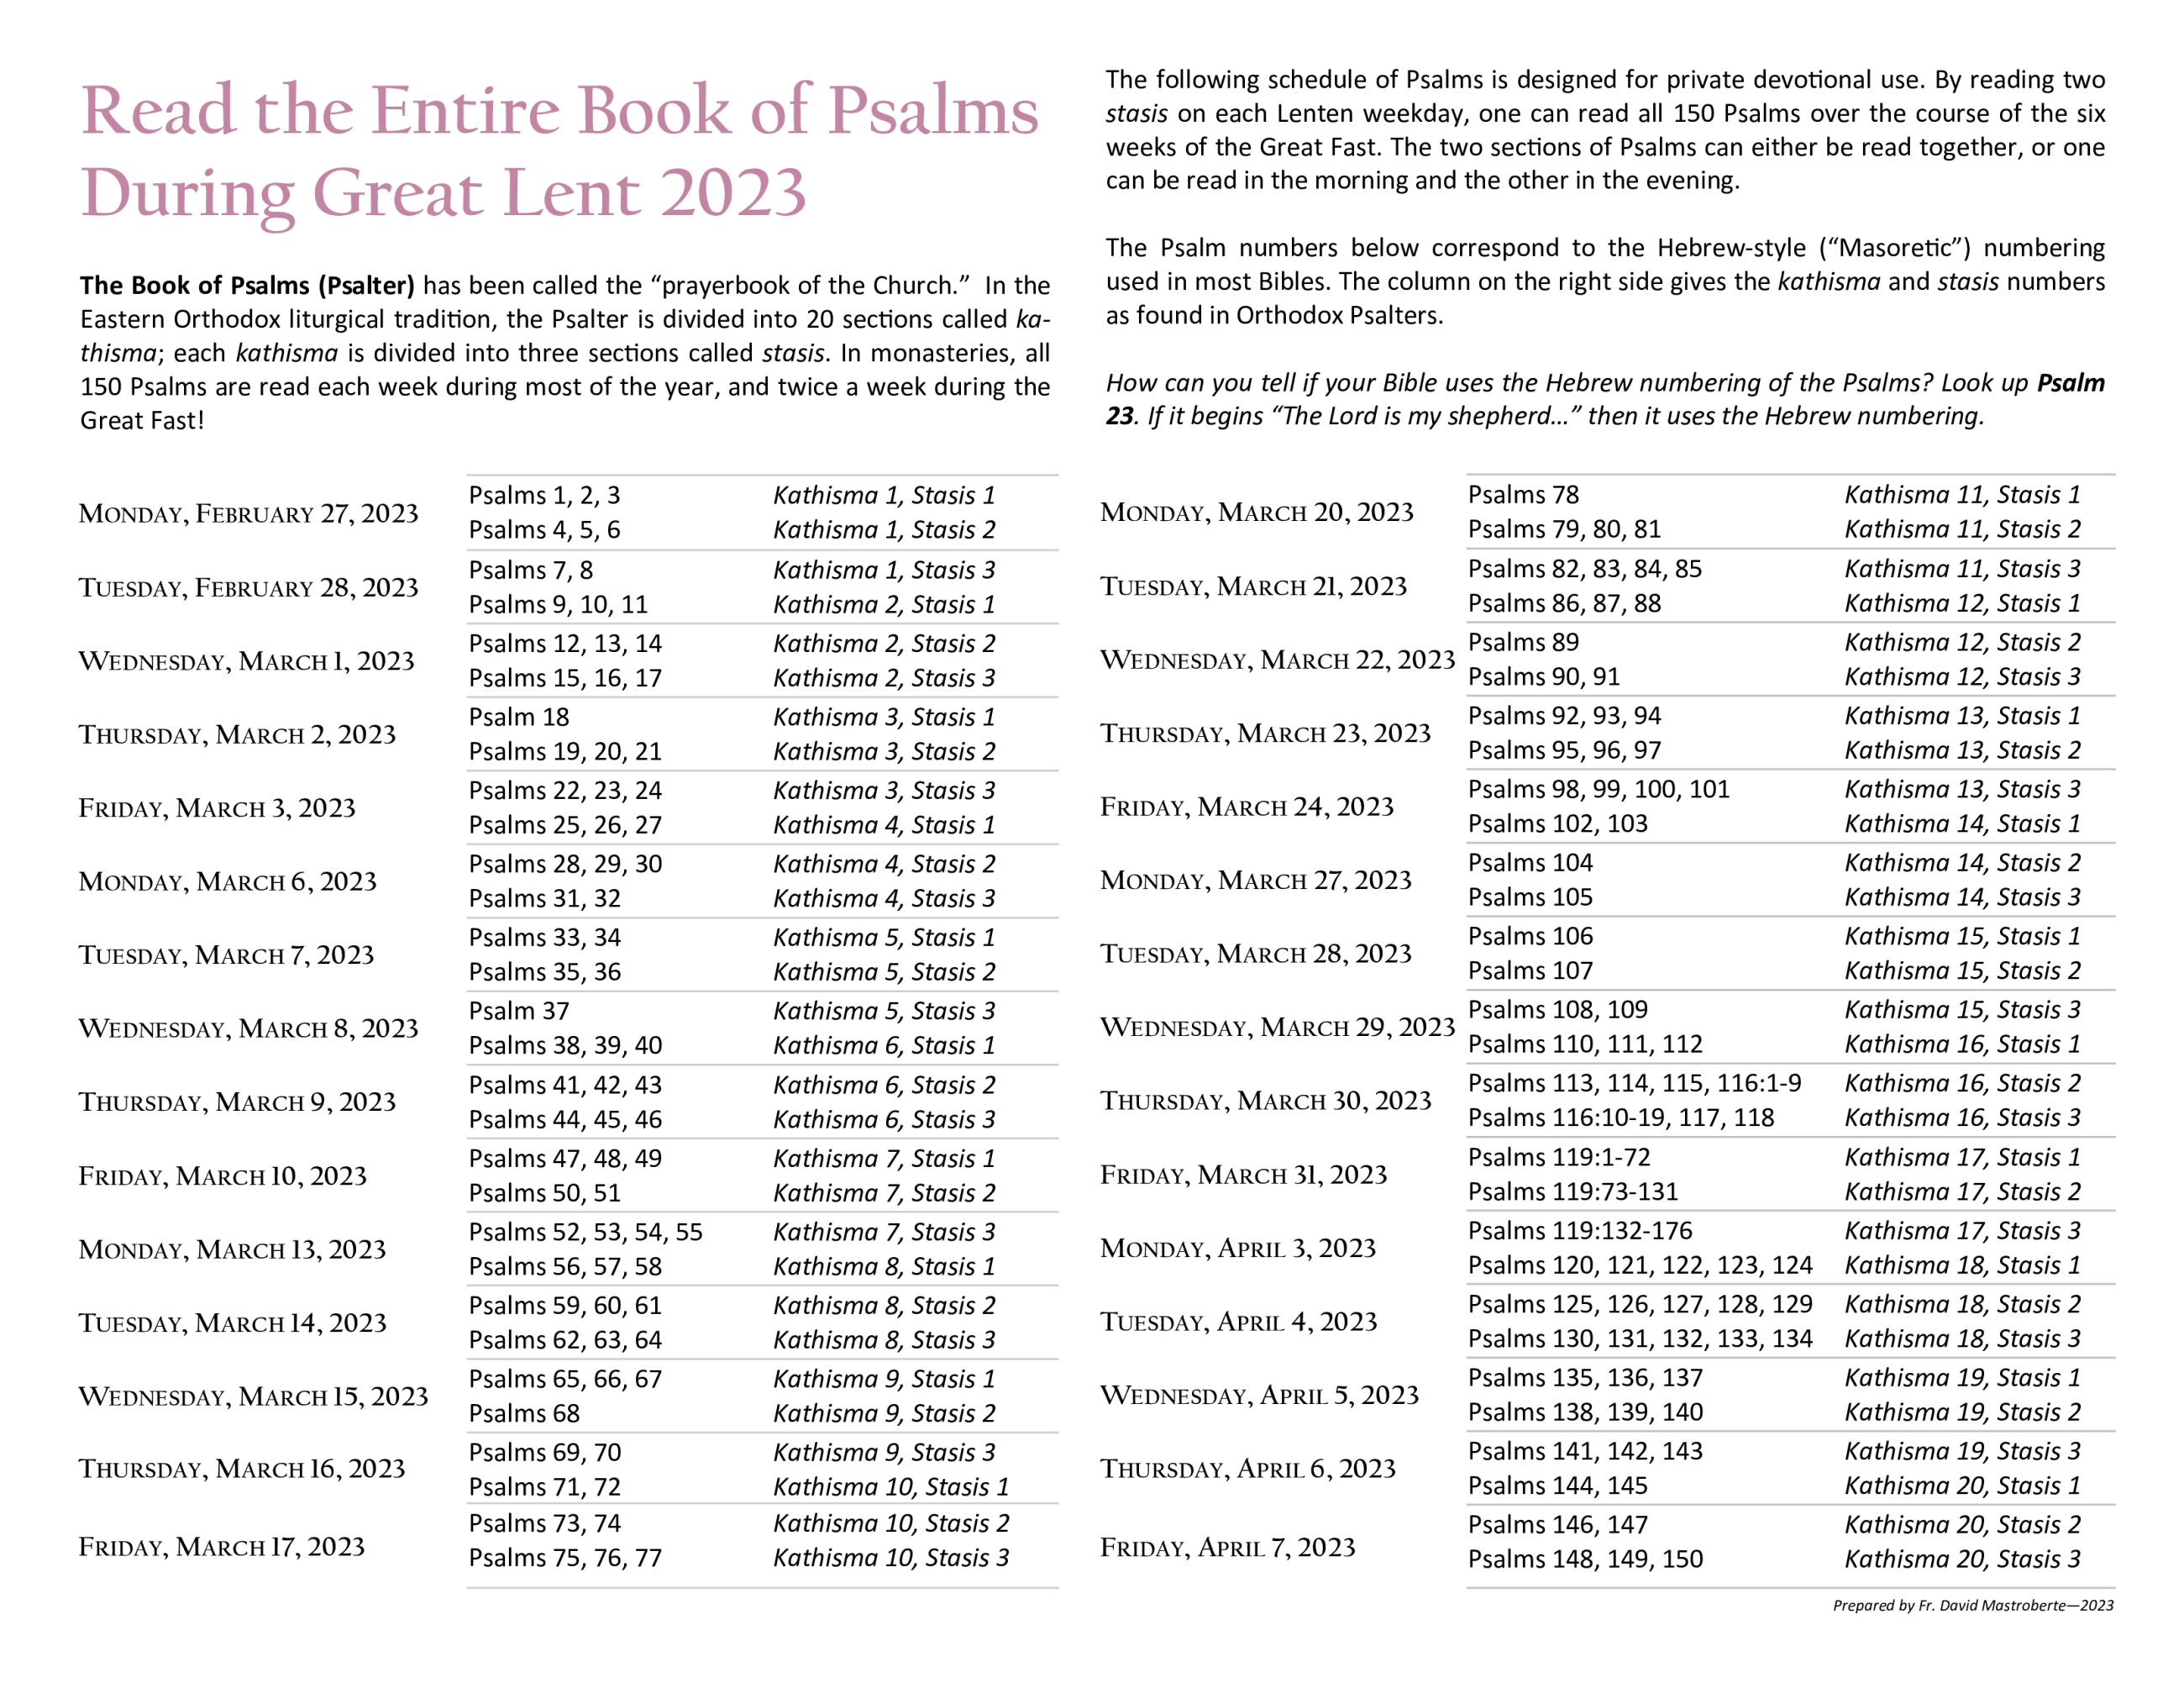 Daily Lenten Psalm Readings